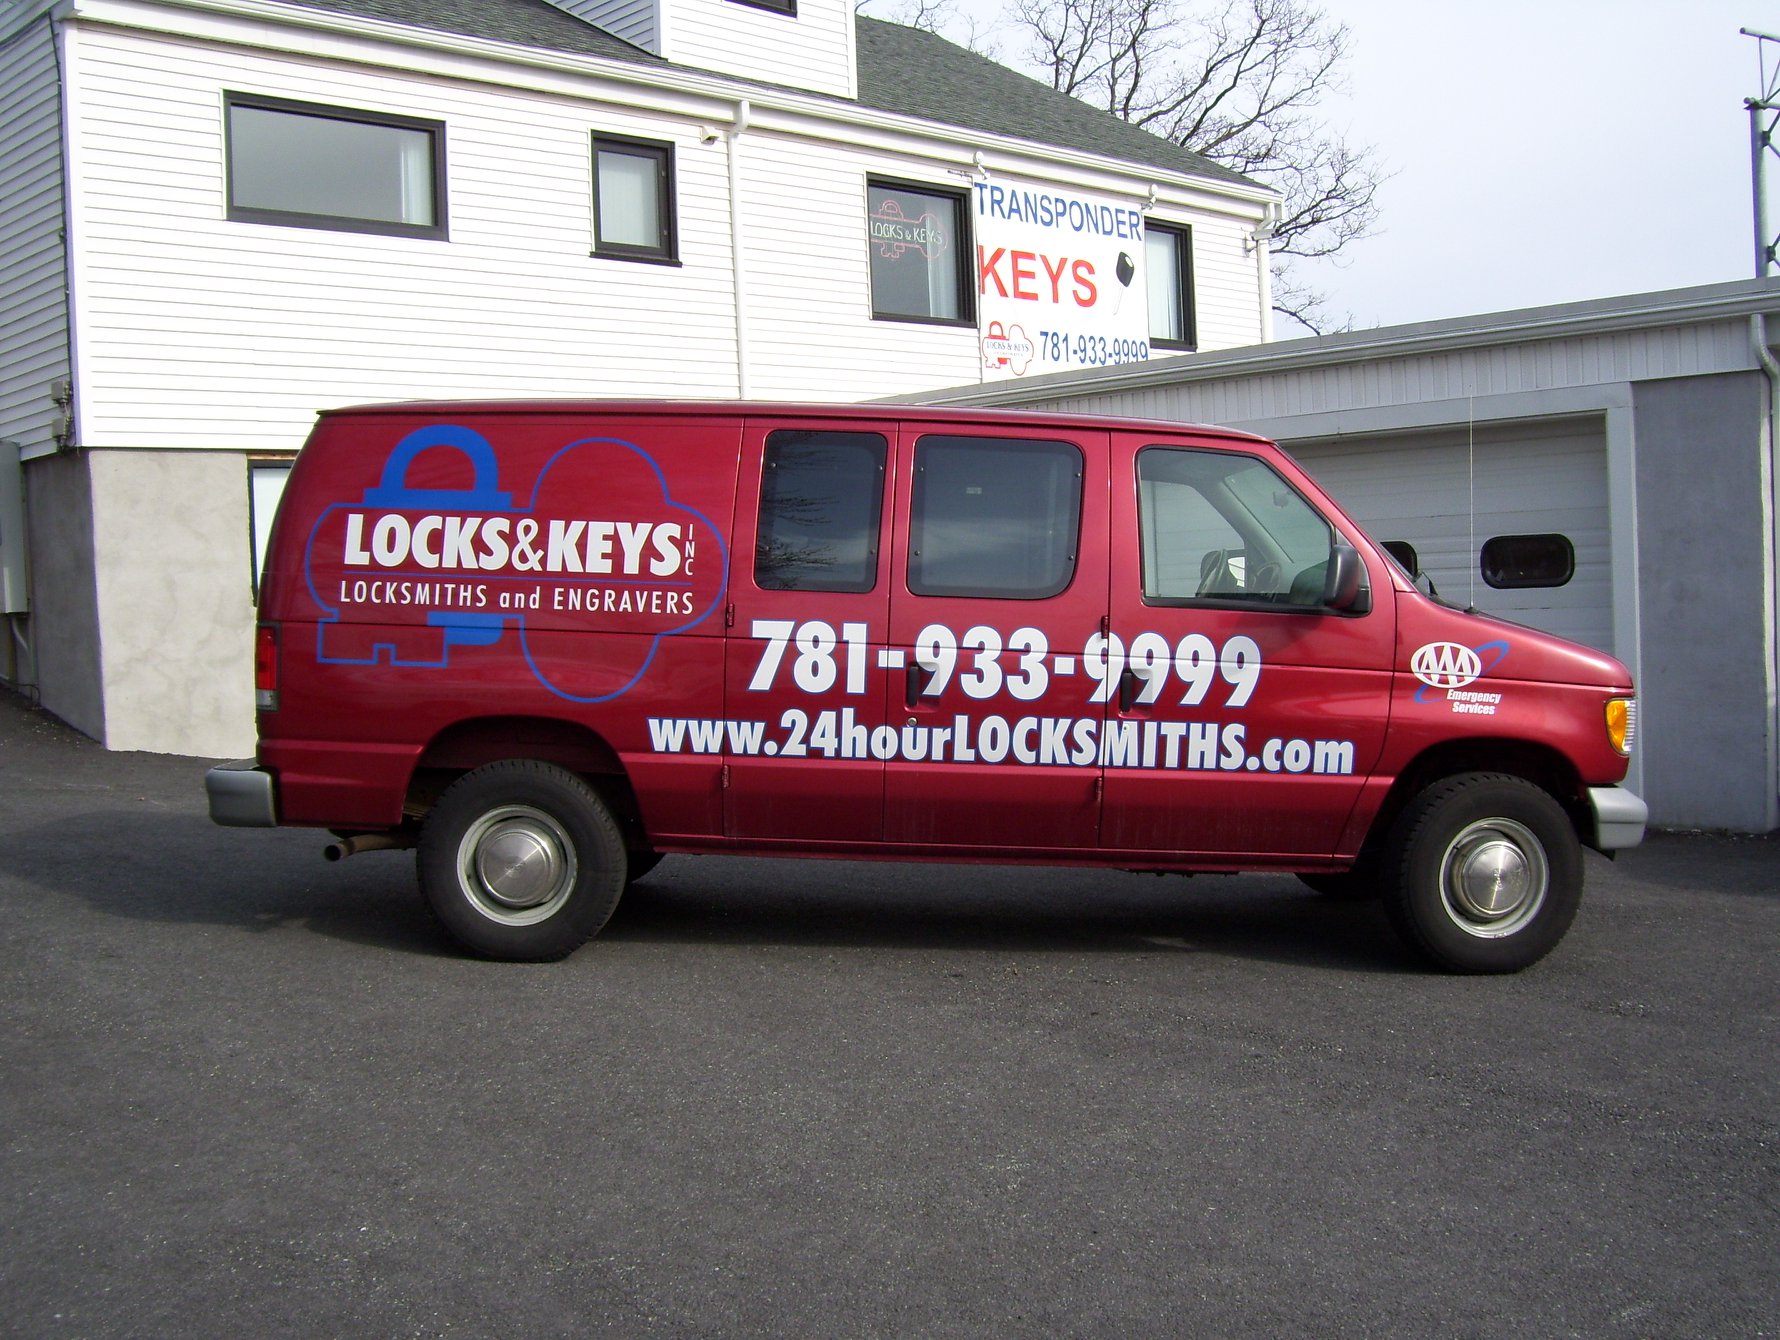 Locks & Keys Inc. - Emergency Services - Boston MA locksmith